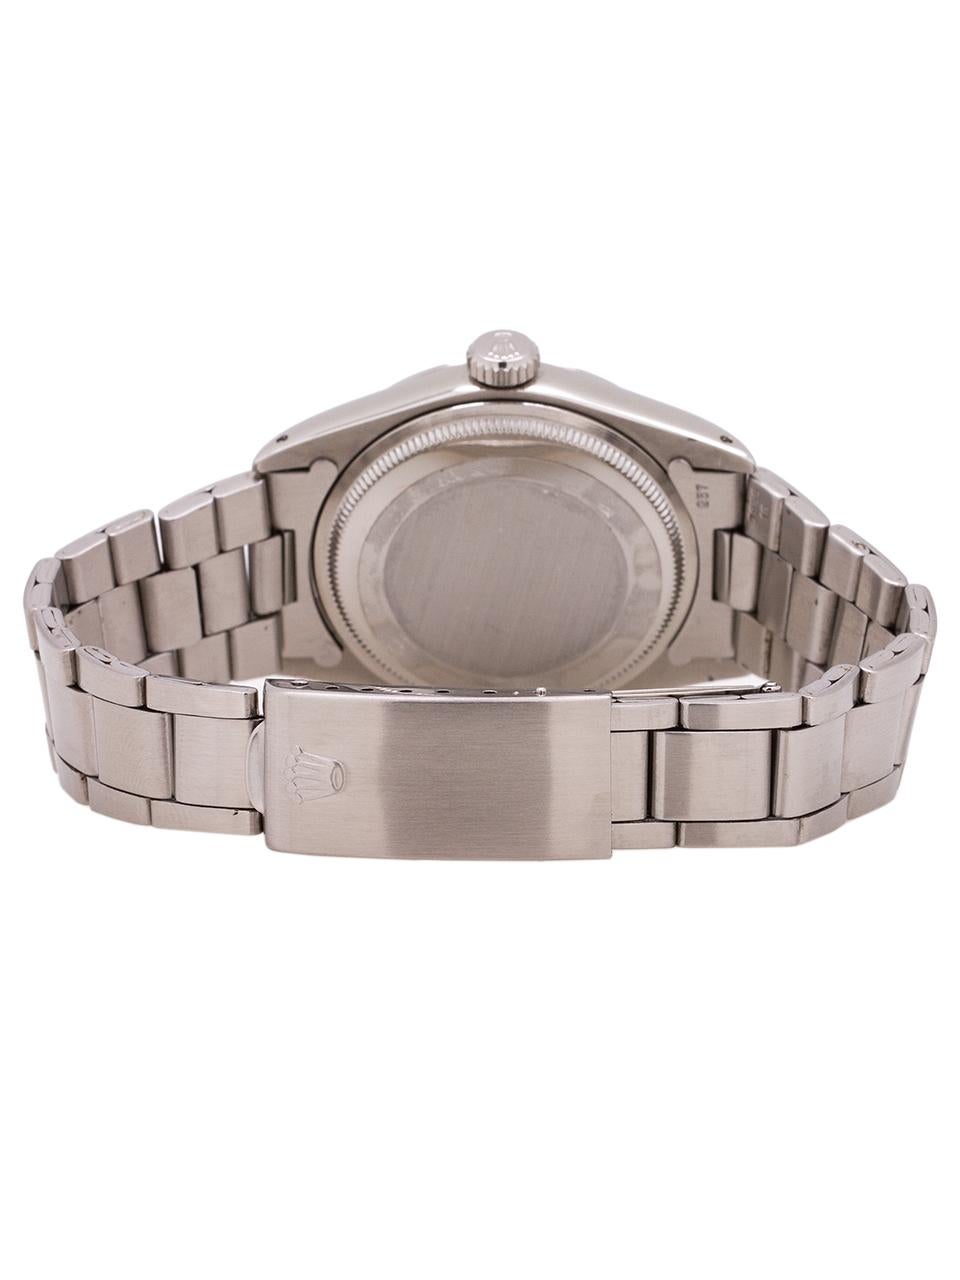 Men's Rolex stainless steel Date Gray Dial self winding Wristwatch Ref 1500, c 1970